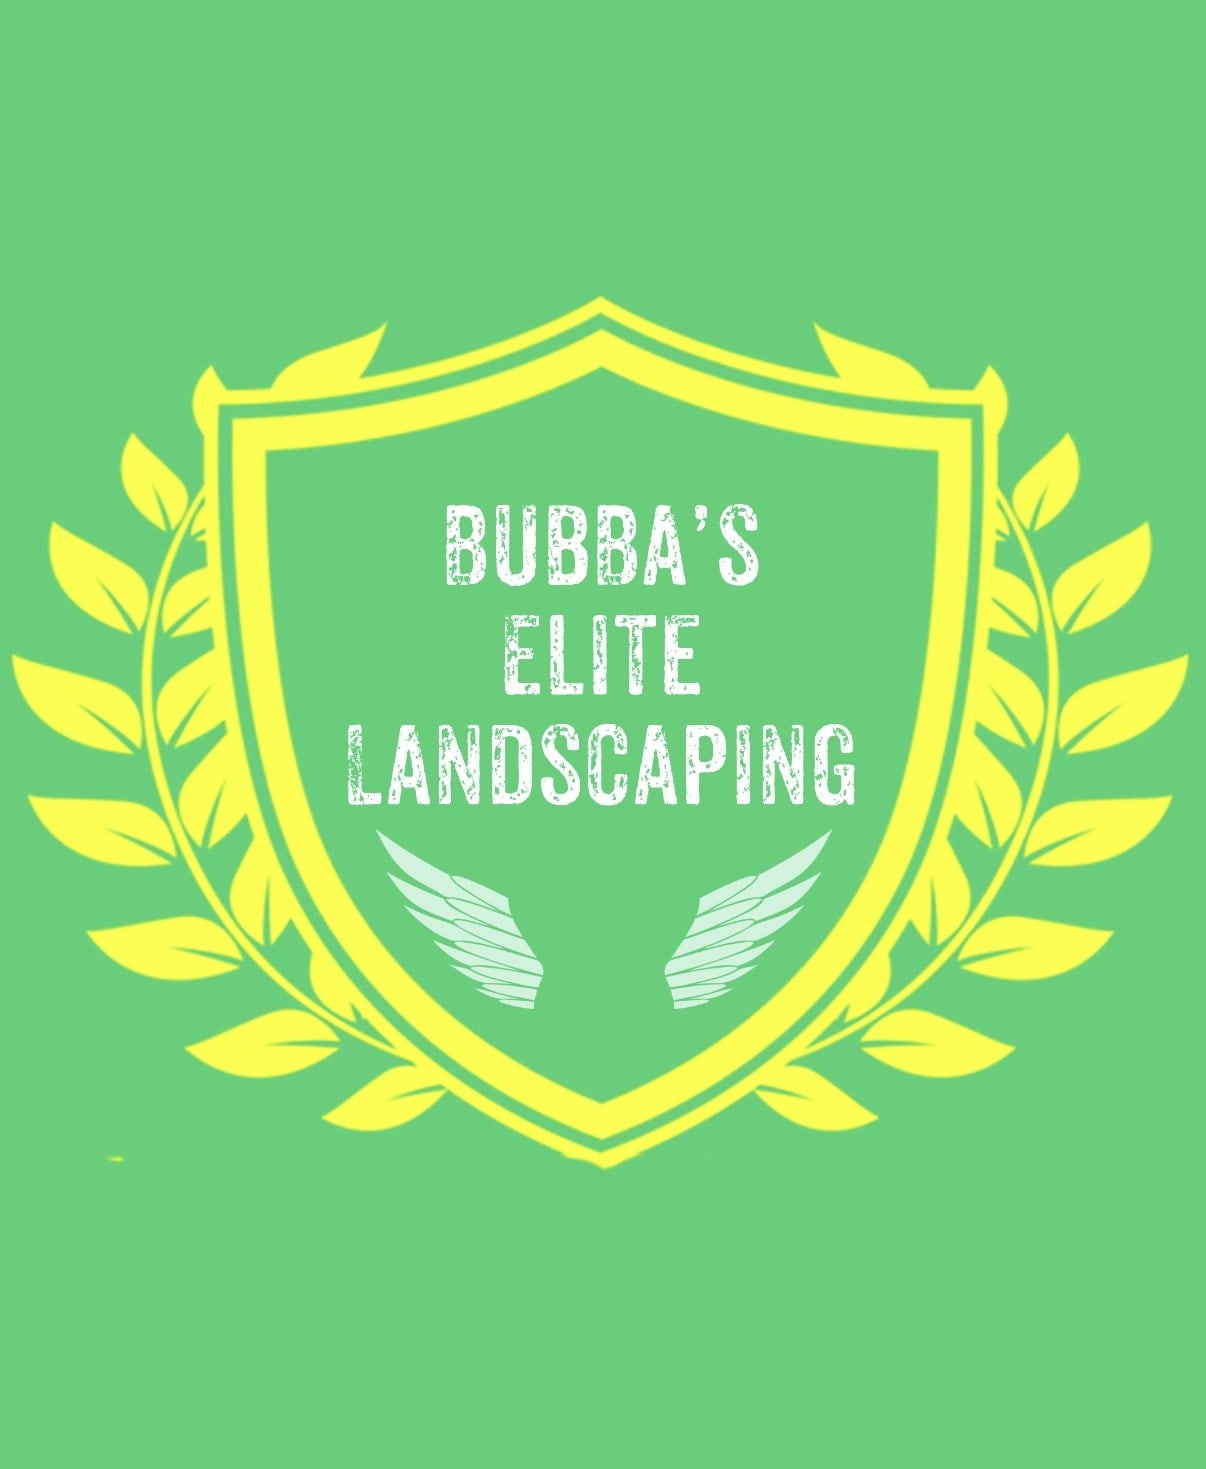 Bubba’s Elite Landscaping